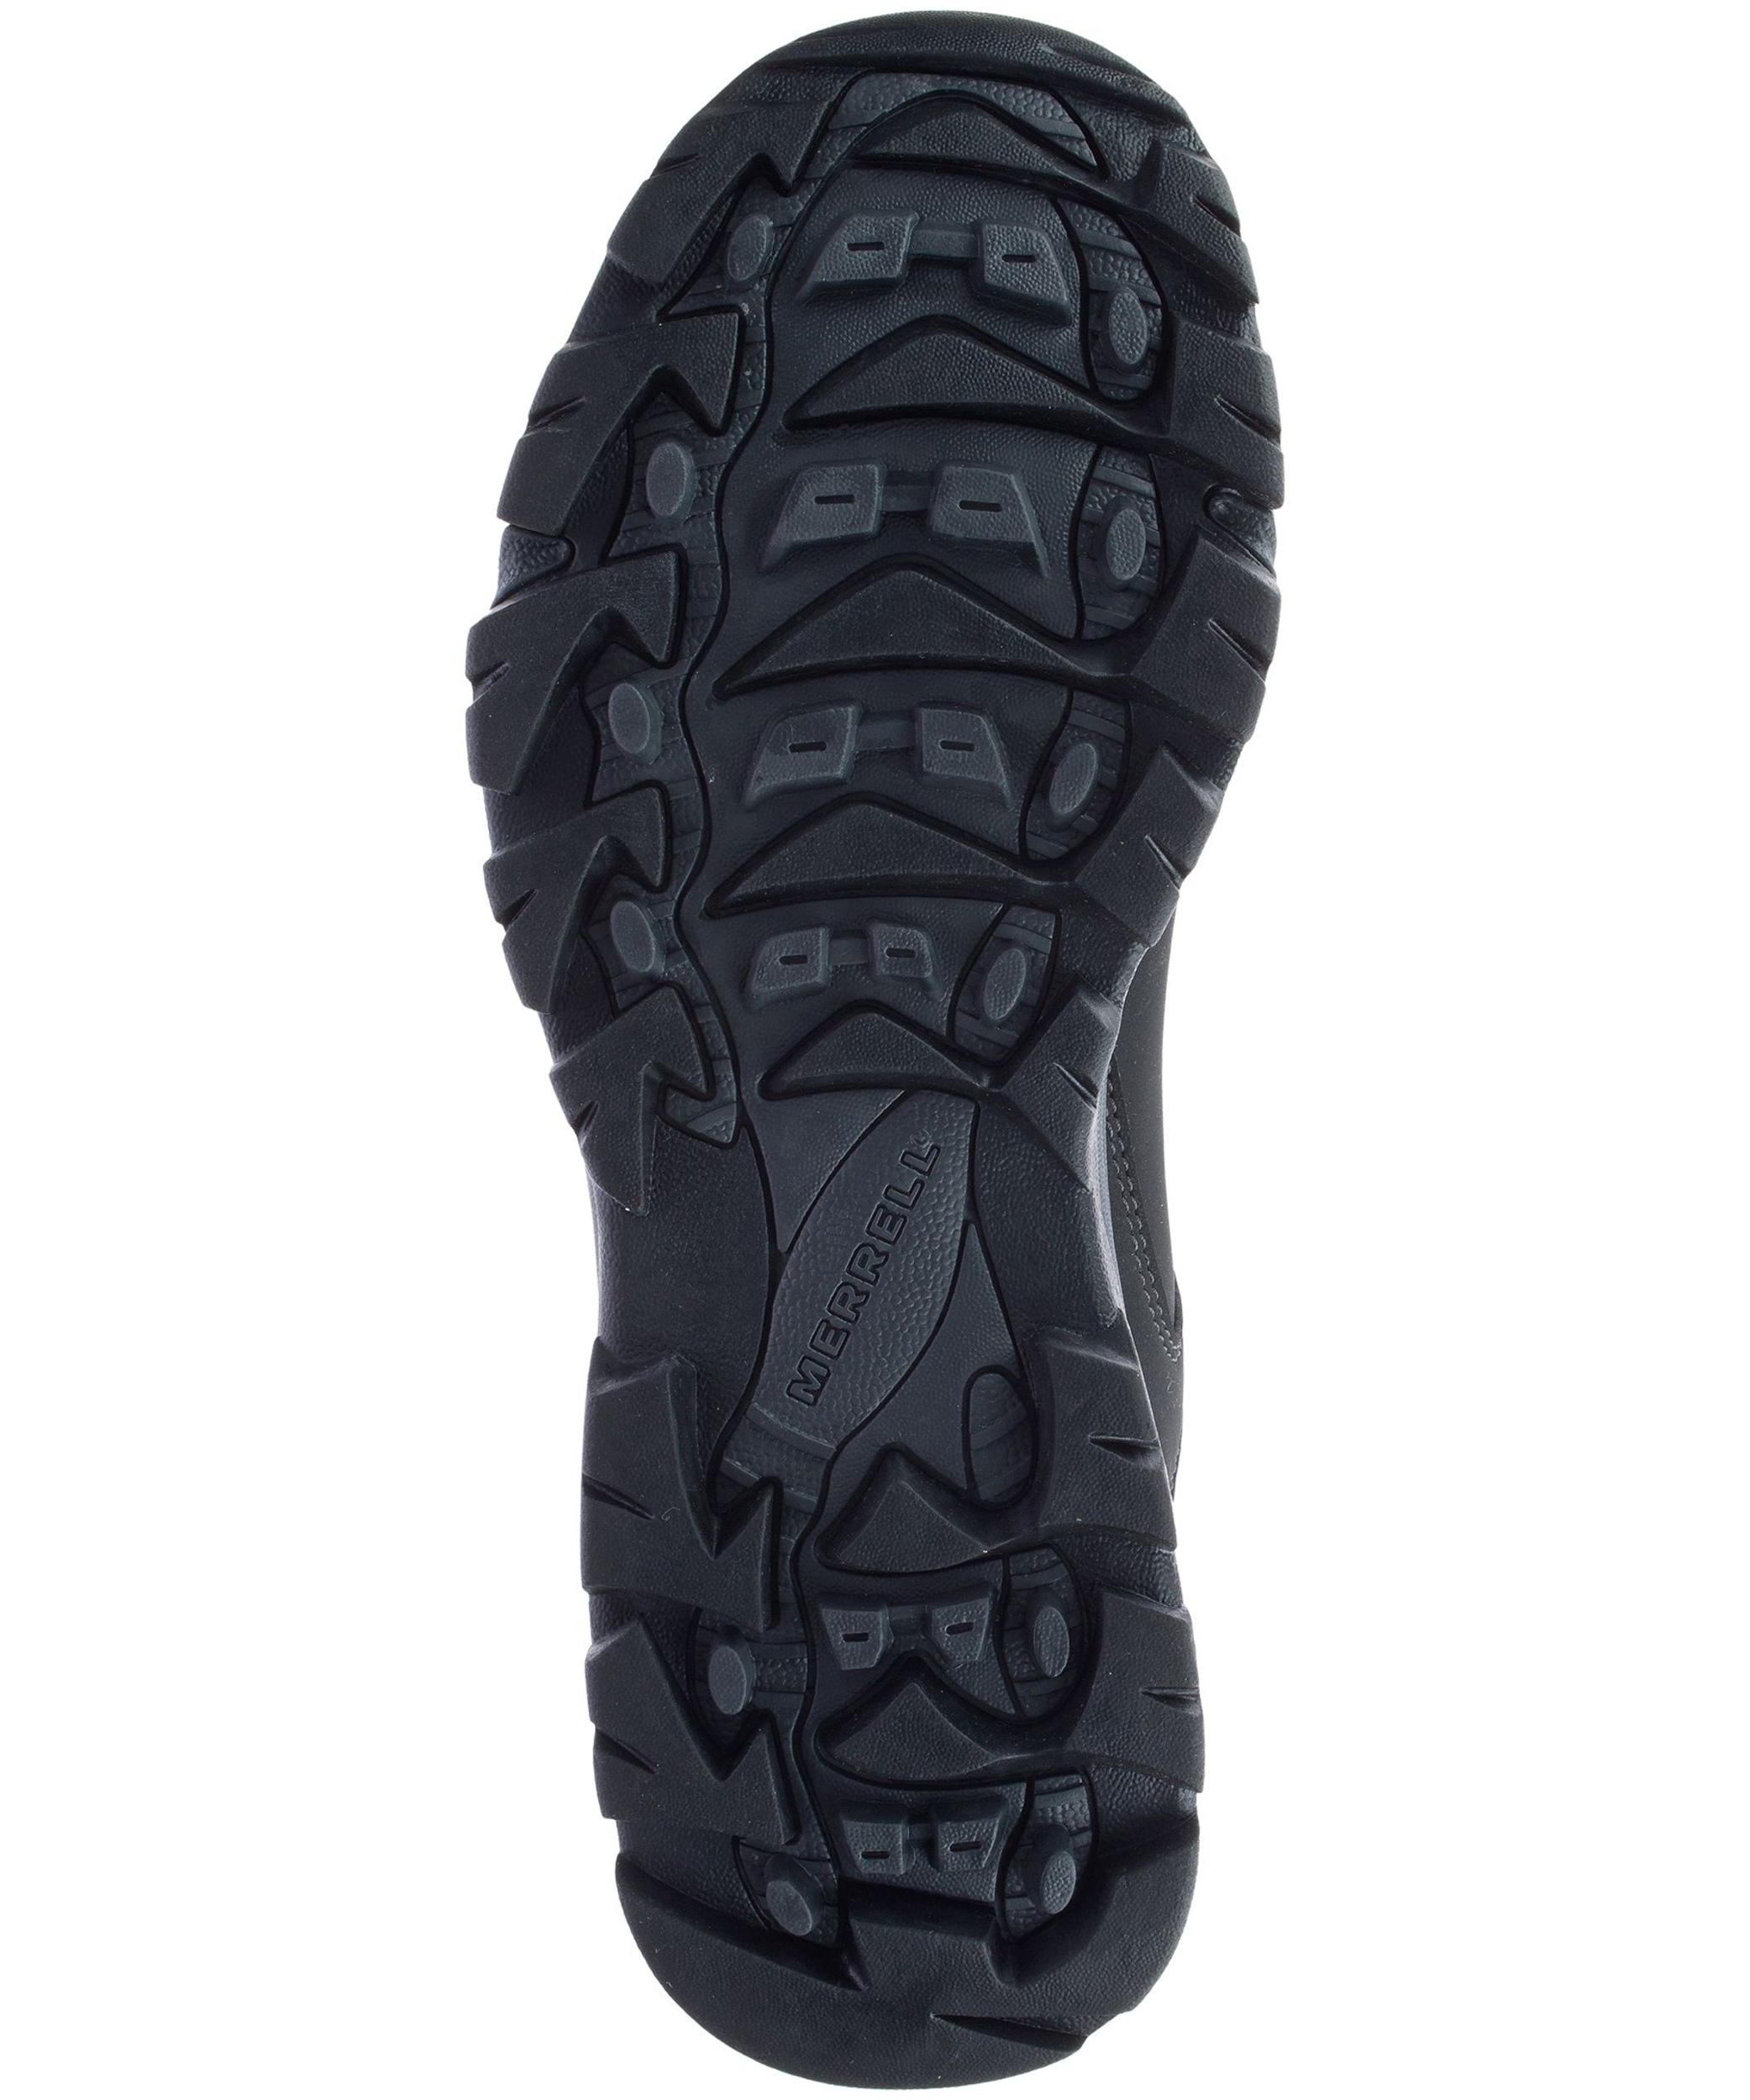 Merrell Men's VEGO Waterproof Leather Hiking Boots - Black | Marks